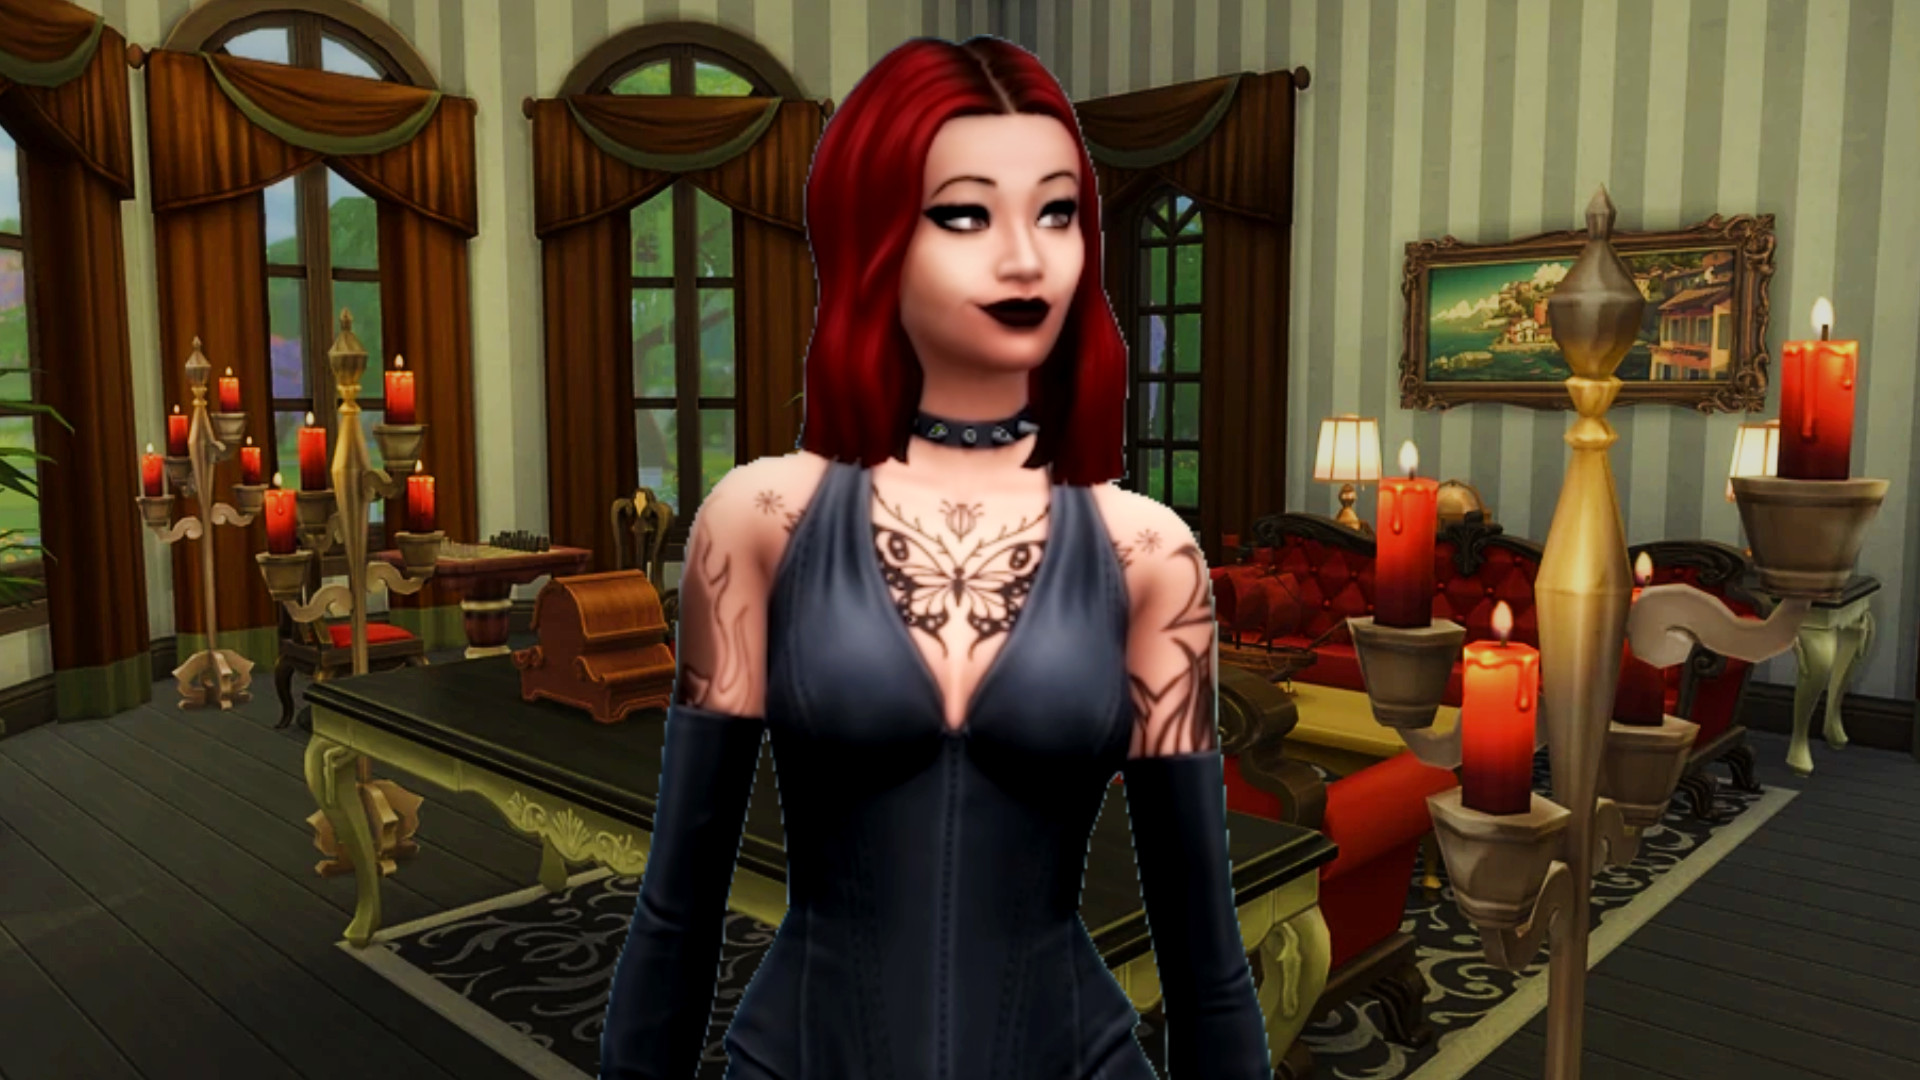 Halloween The Sims 4 builds inspire that creepy creativity